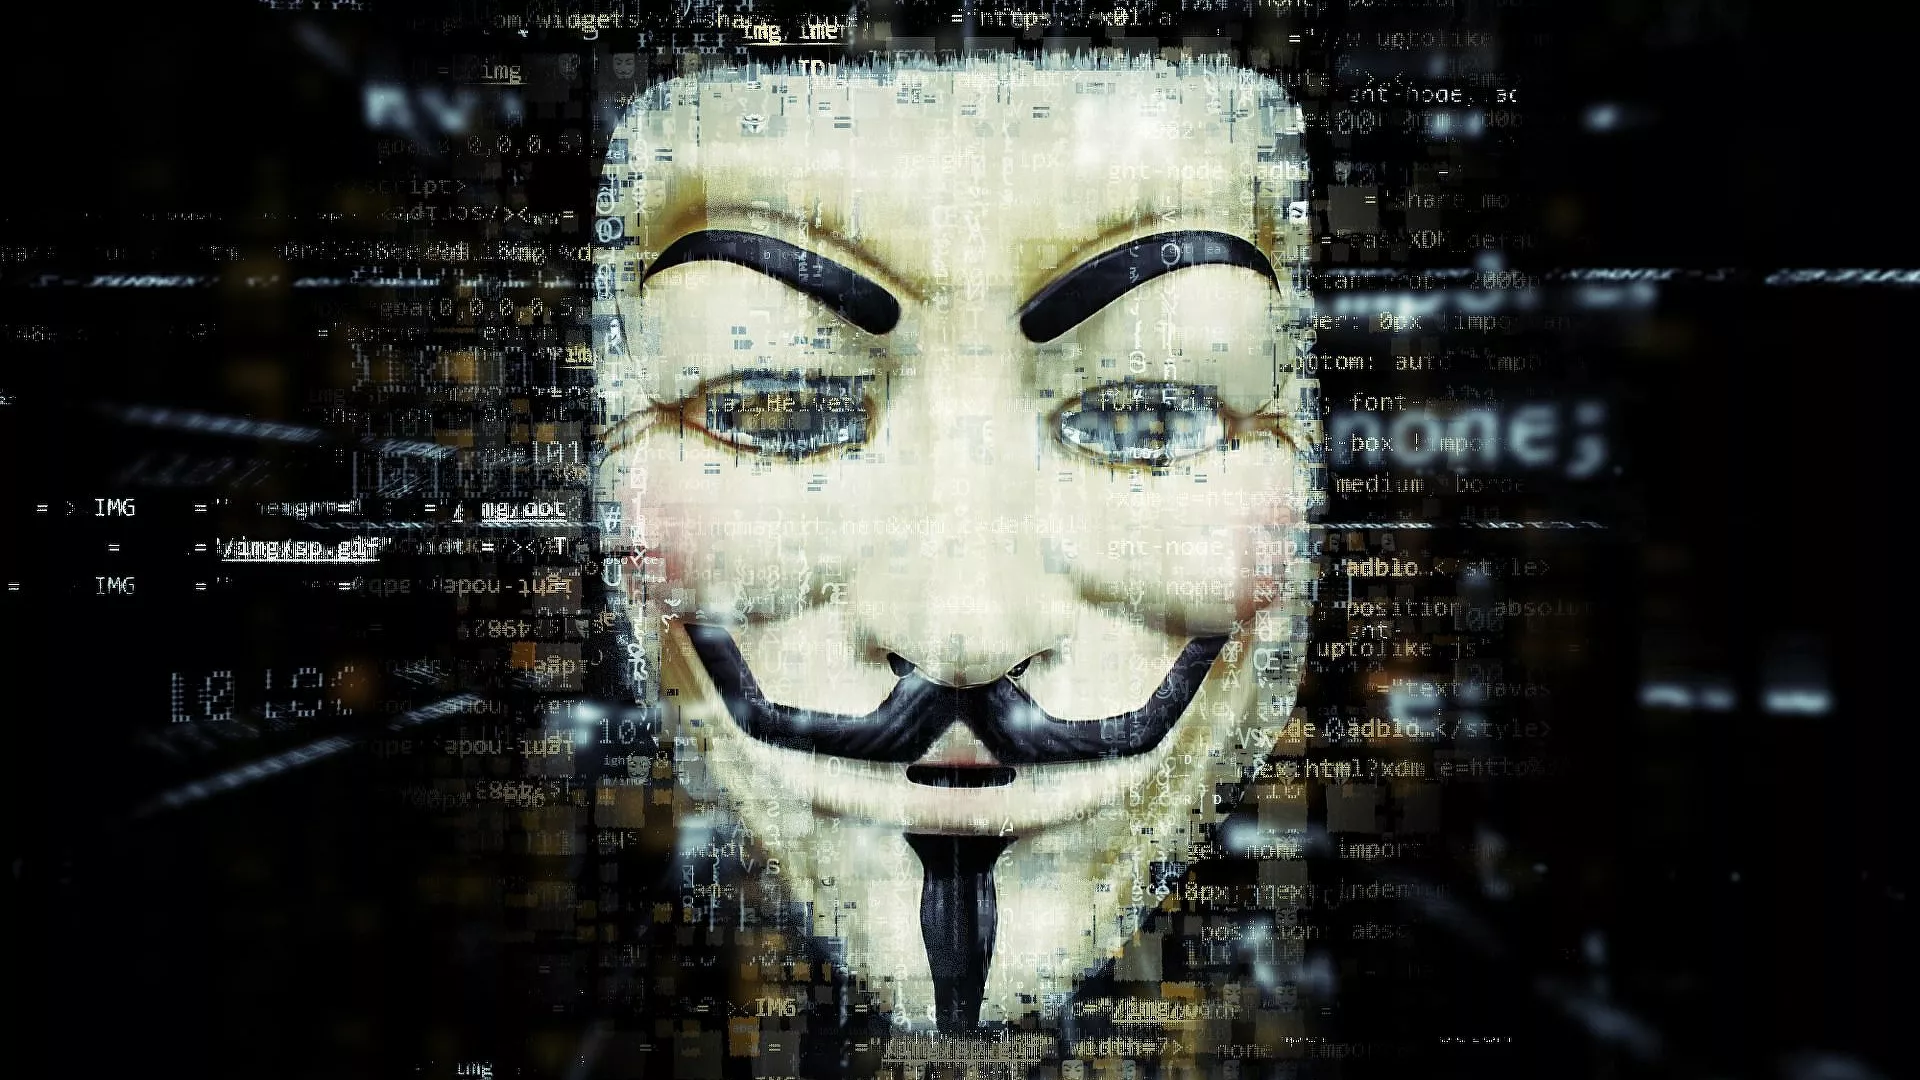  ‘Hackers’ rusos asestan un golpe de respuesta a Anonymous e inhabilitan su sitio web